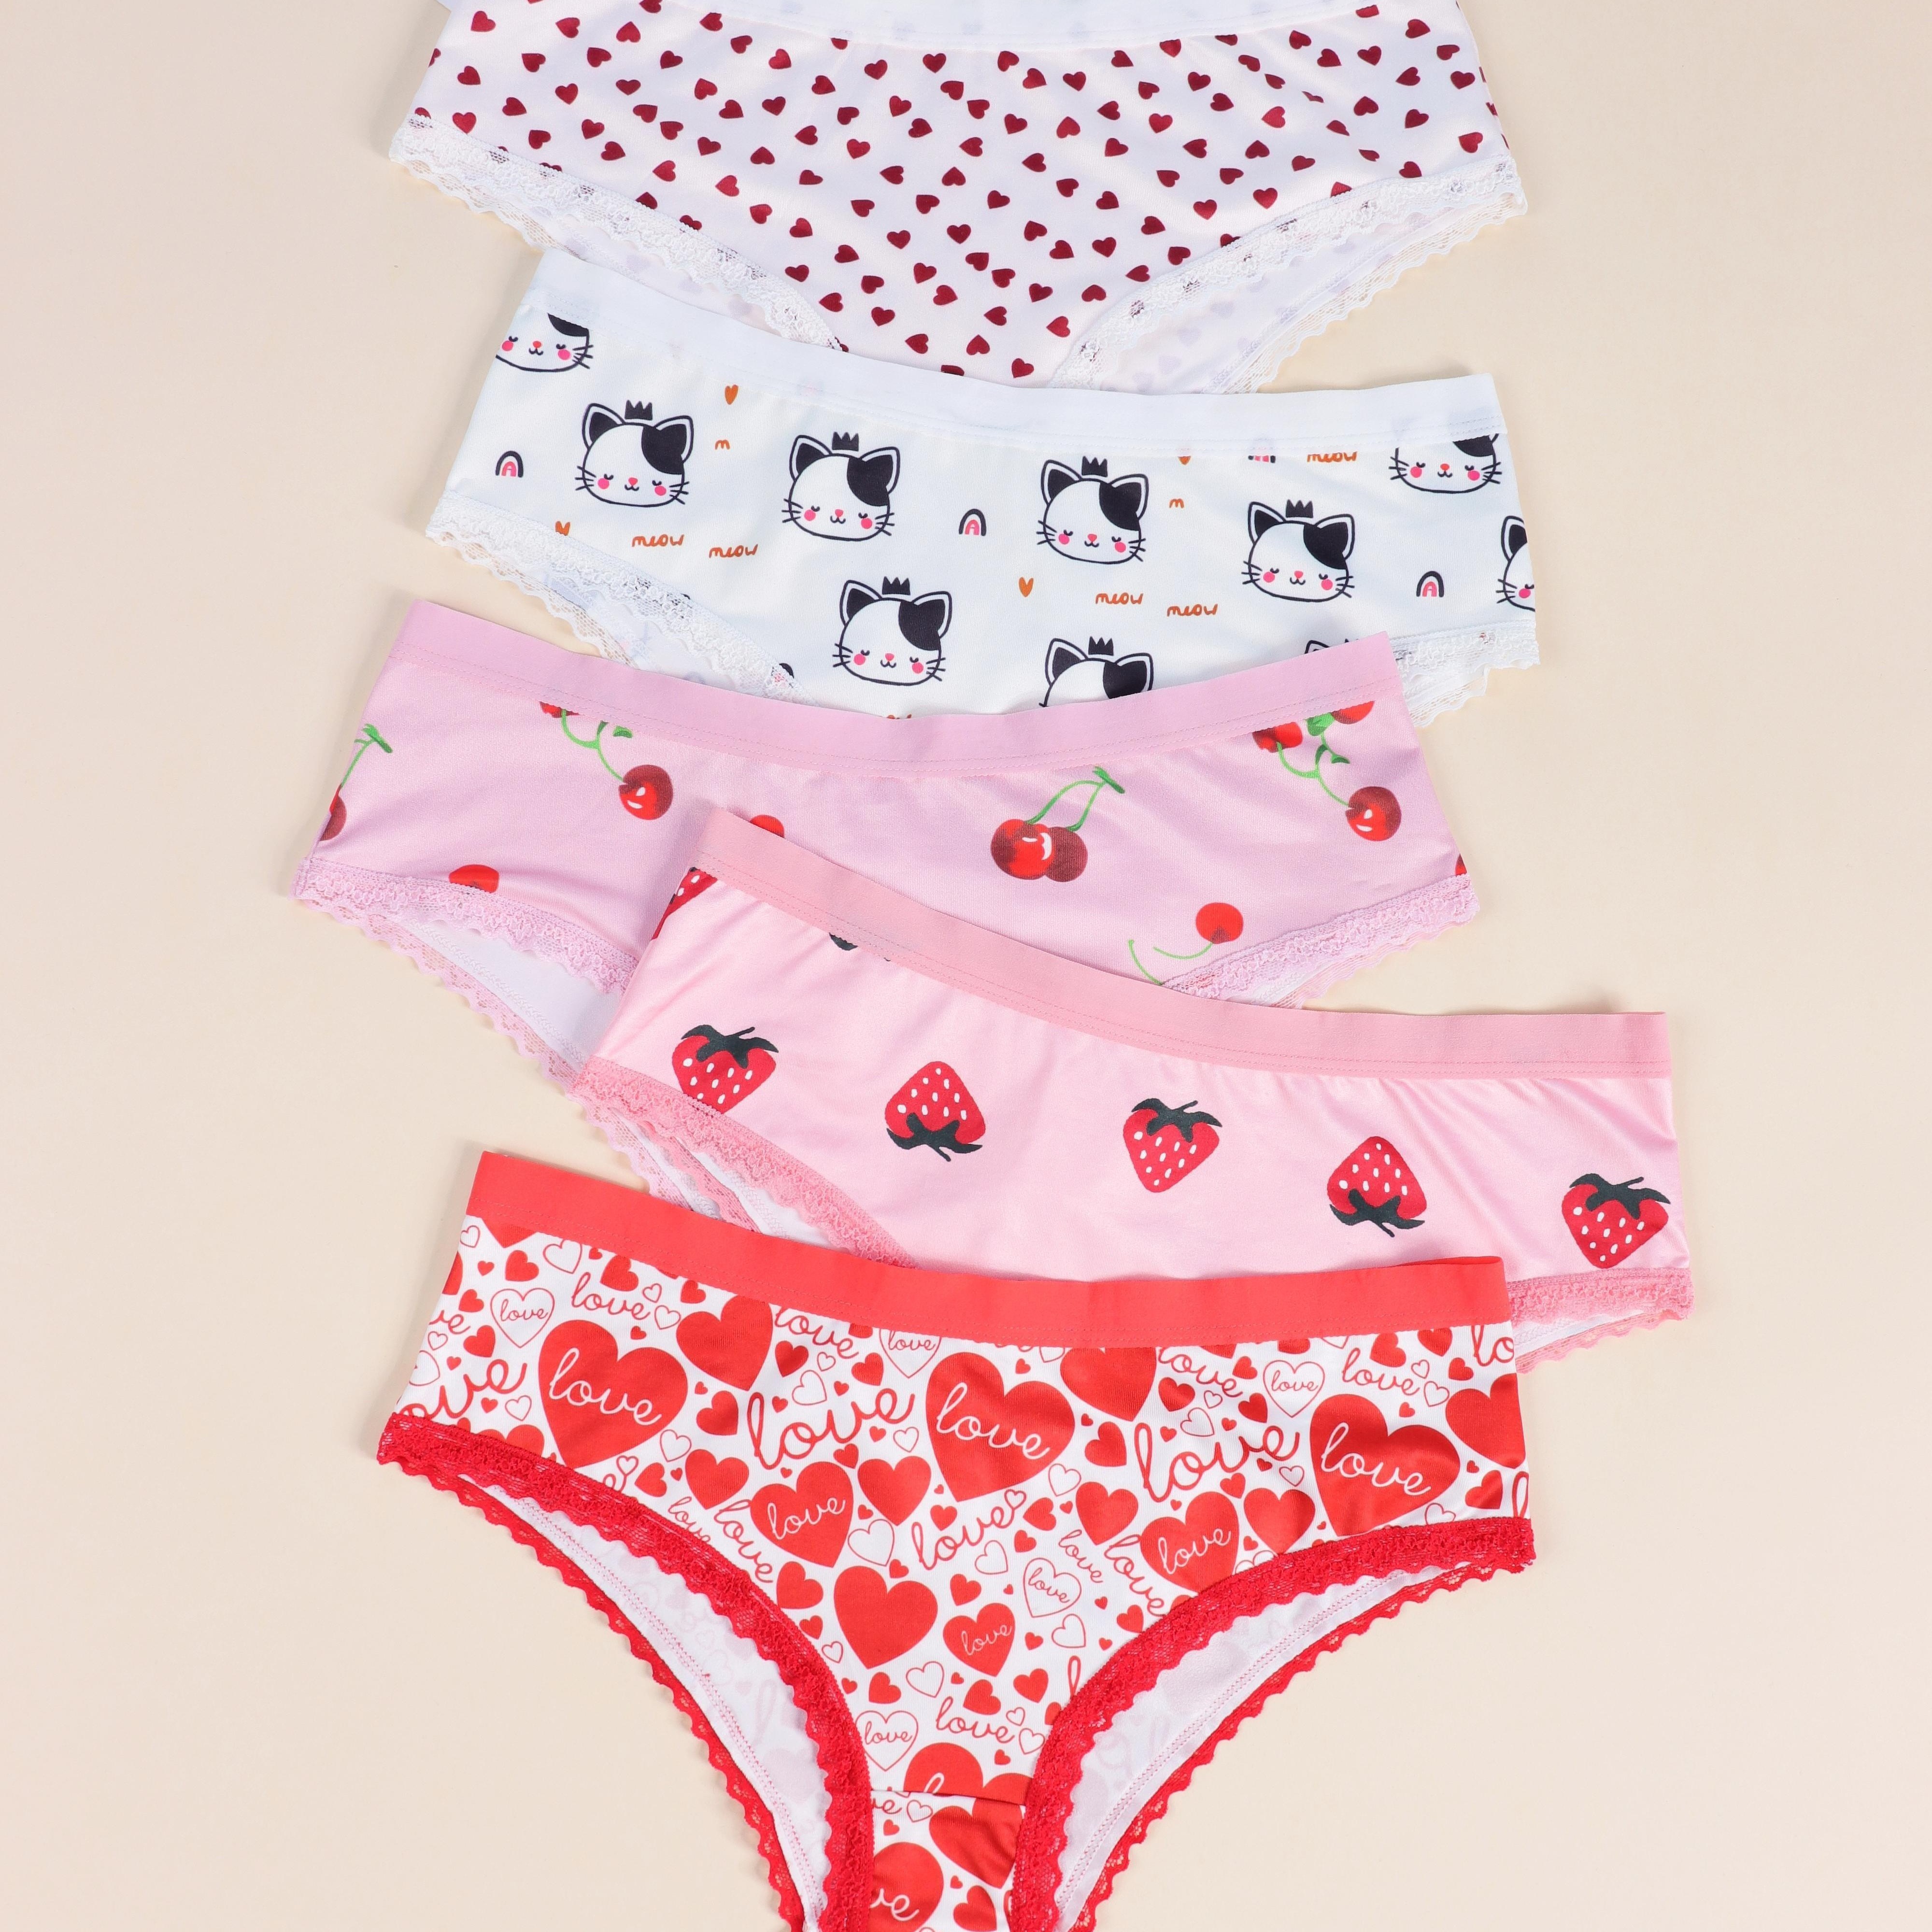 

5 Pcs Valentine's Day Heart & Strawberry Print Panties, Seamless Lace Trim Intimates Briefs, Women's Lingerie & Underwear